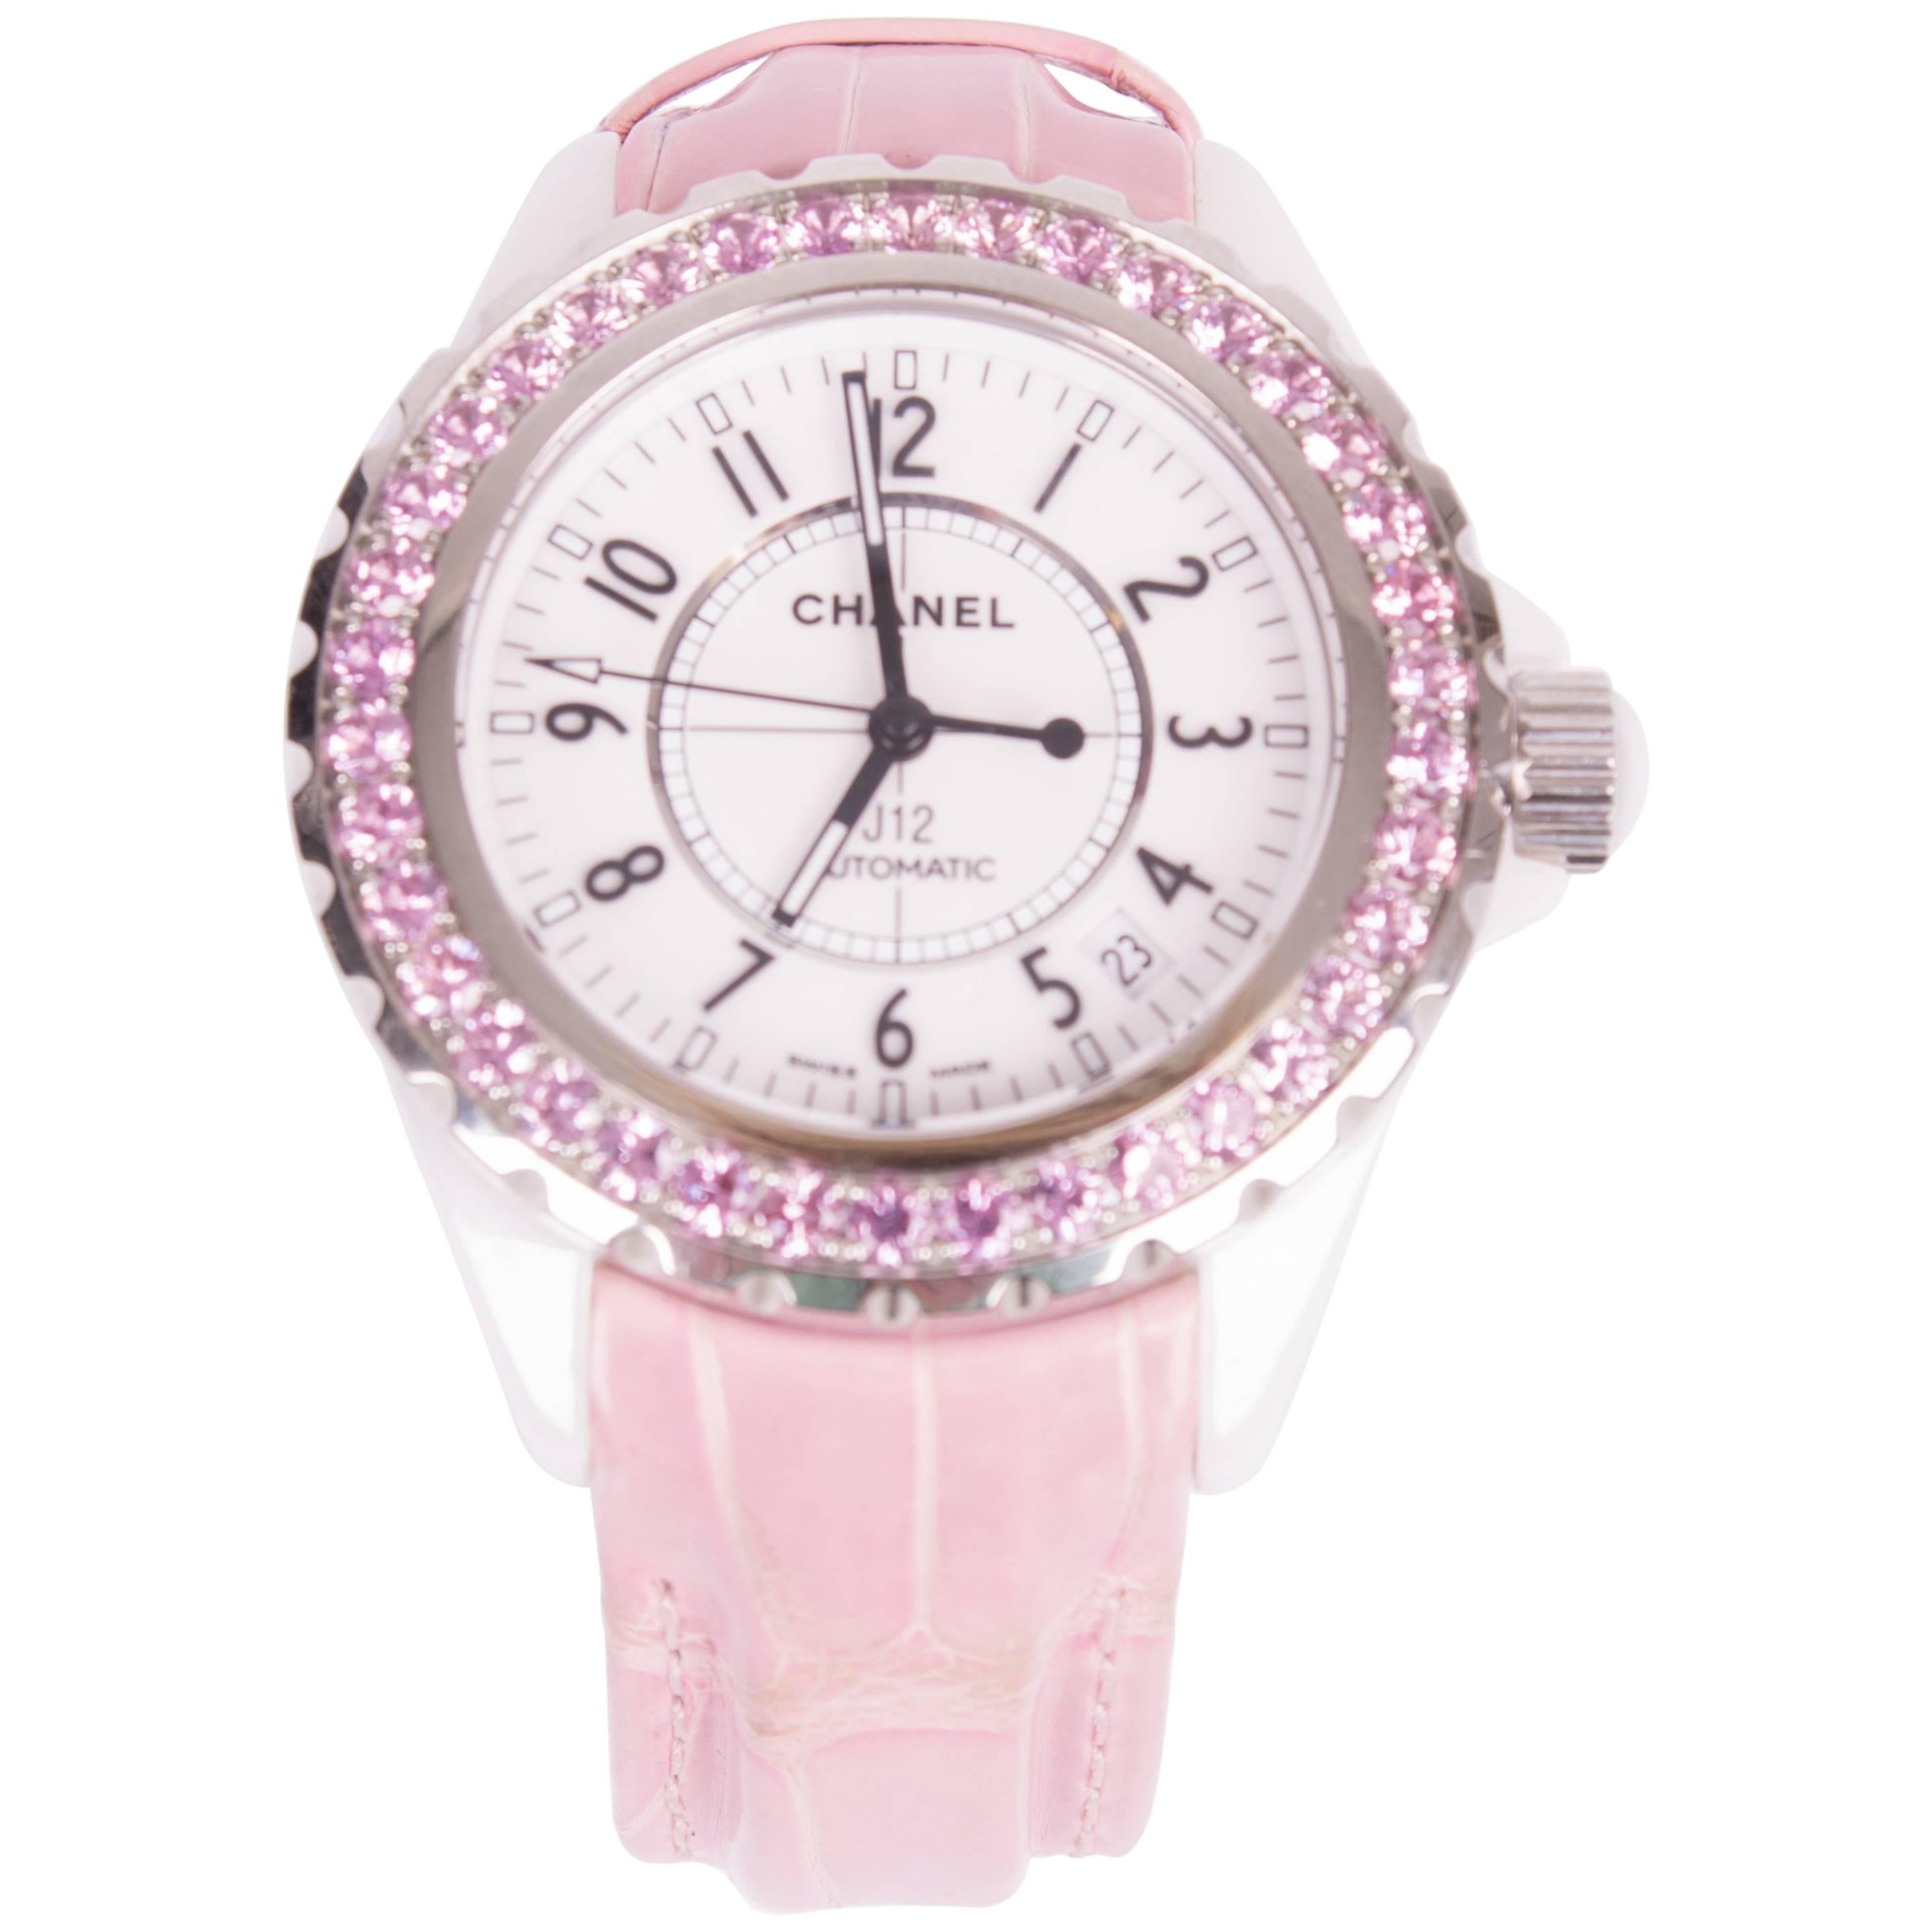 Chanel J12 Pink Sapphire Watch - pink crocodile strap